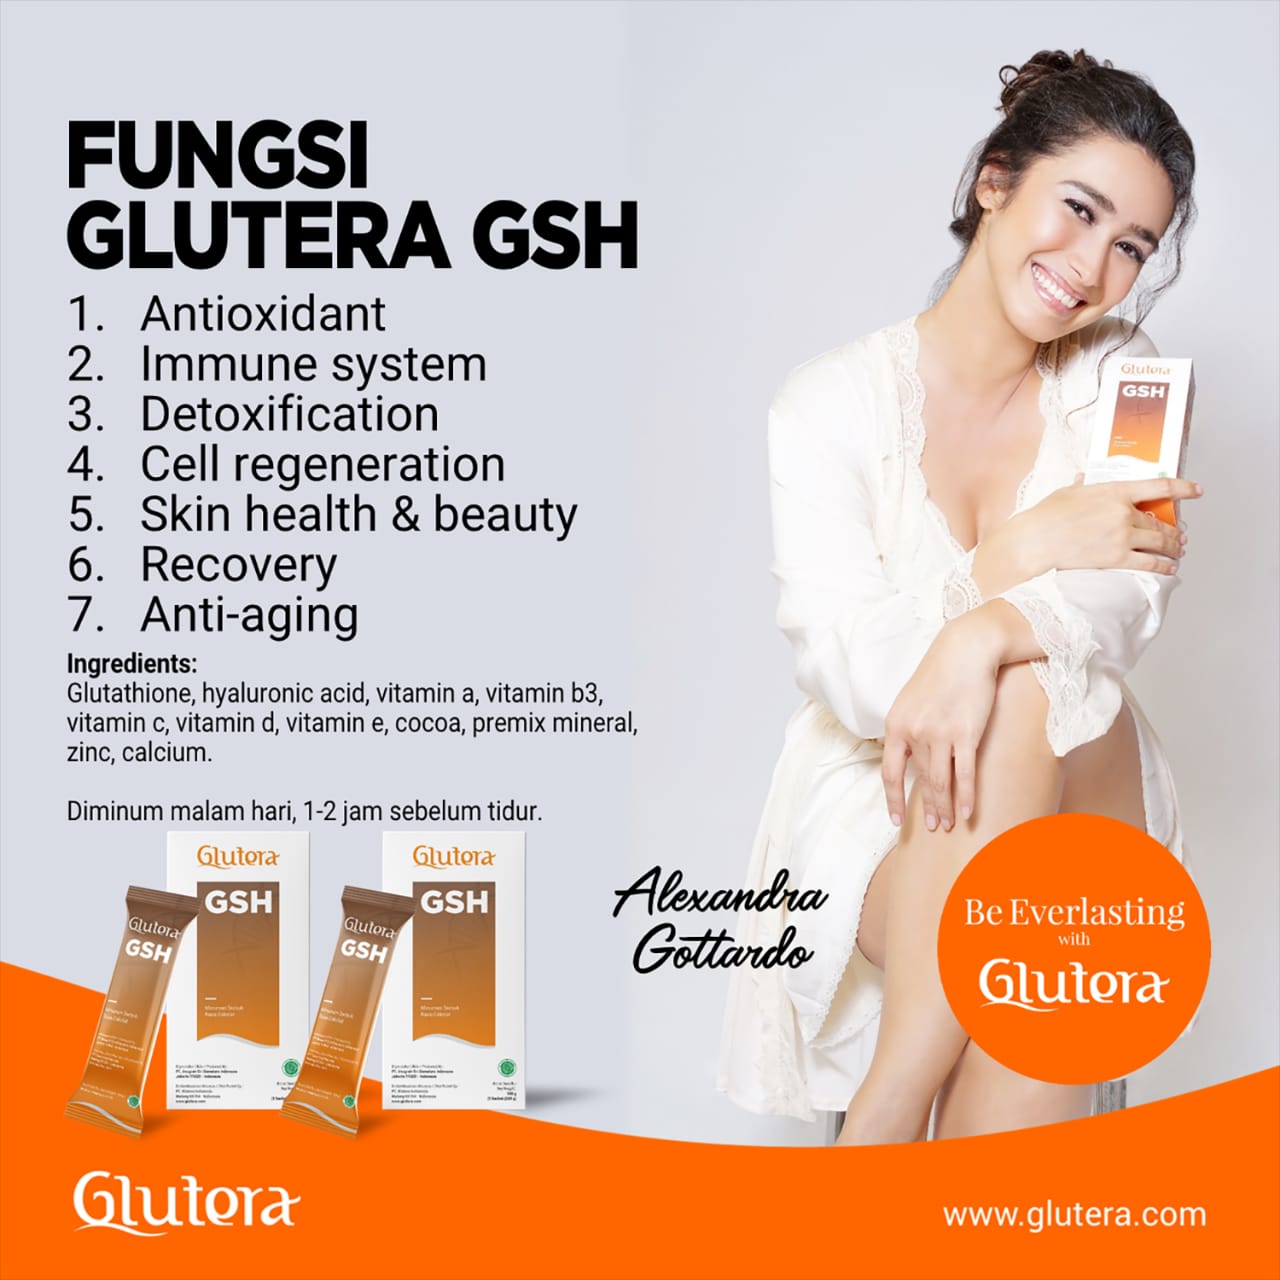 Funsi-Glutera-GSH.jpg